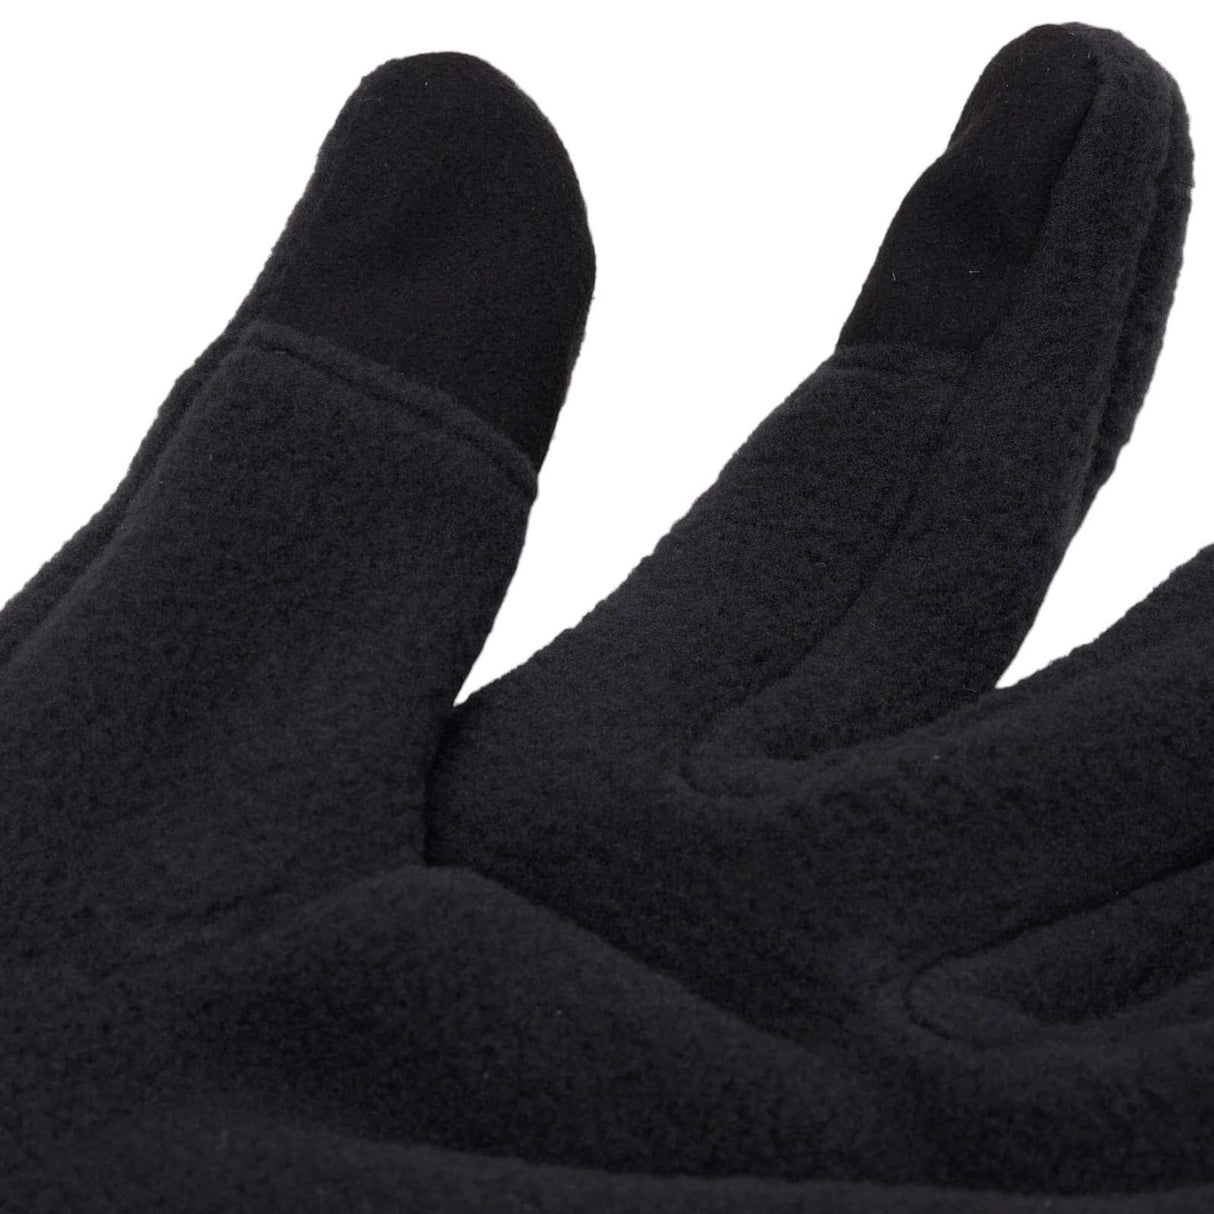 Jordan Mens Hyperstorm Gloves